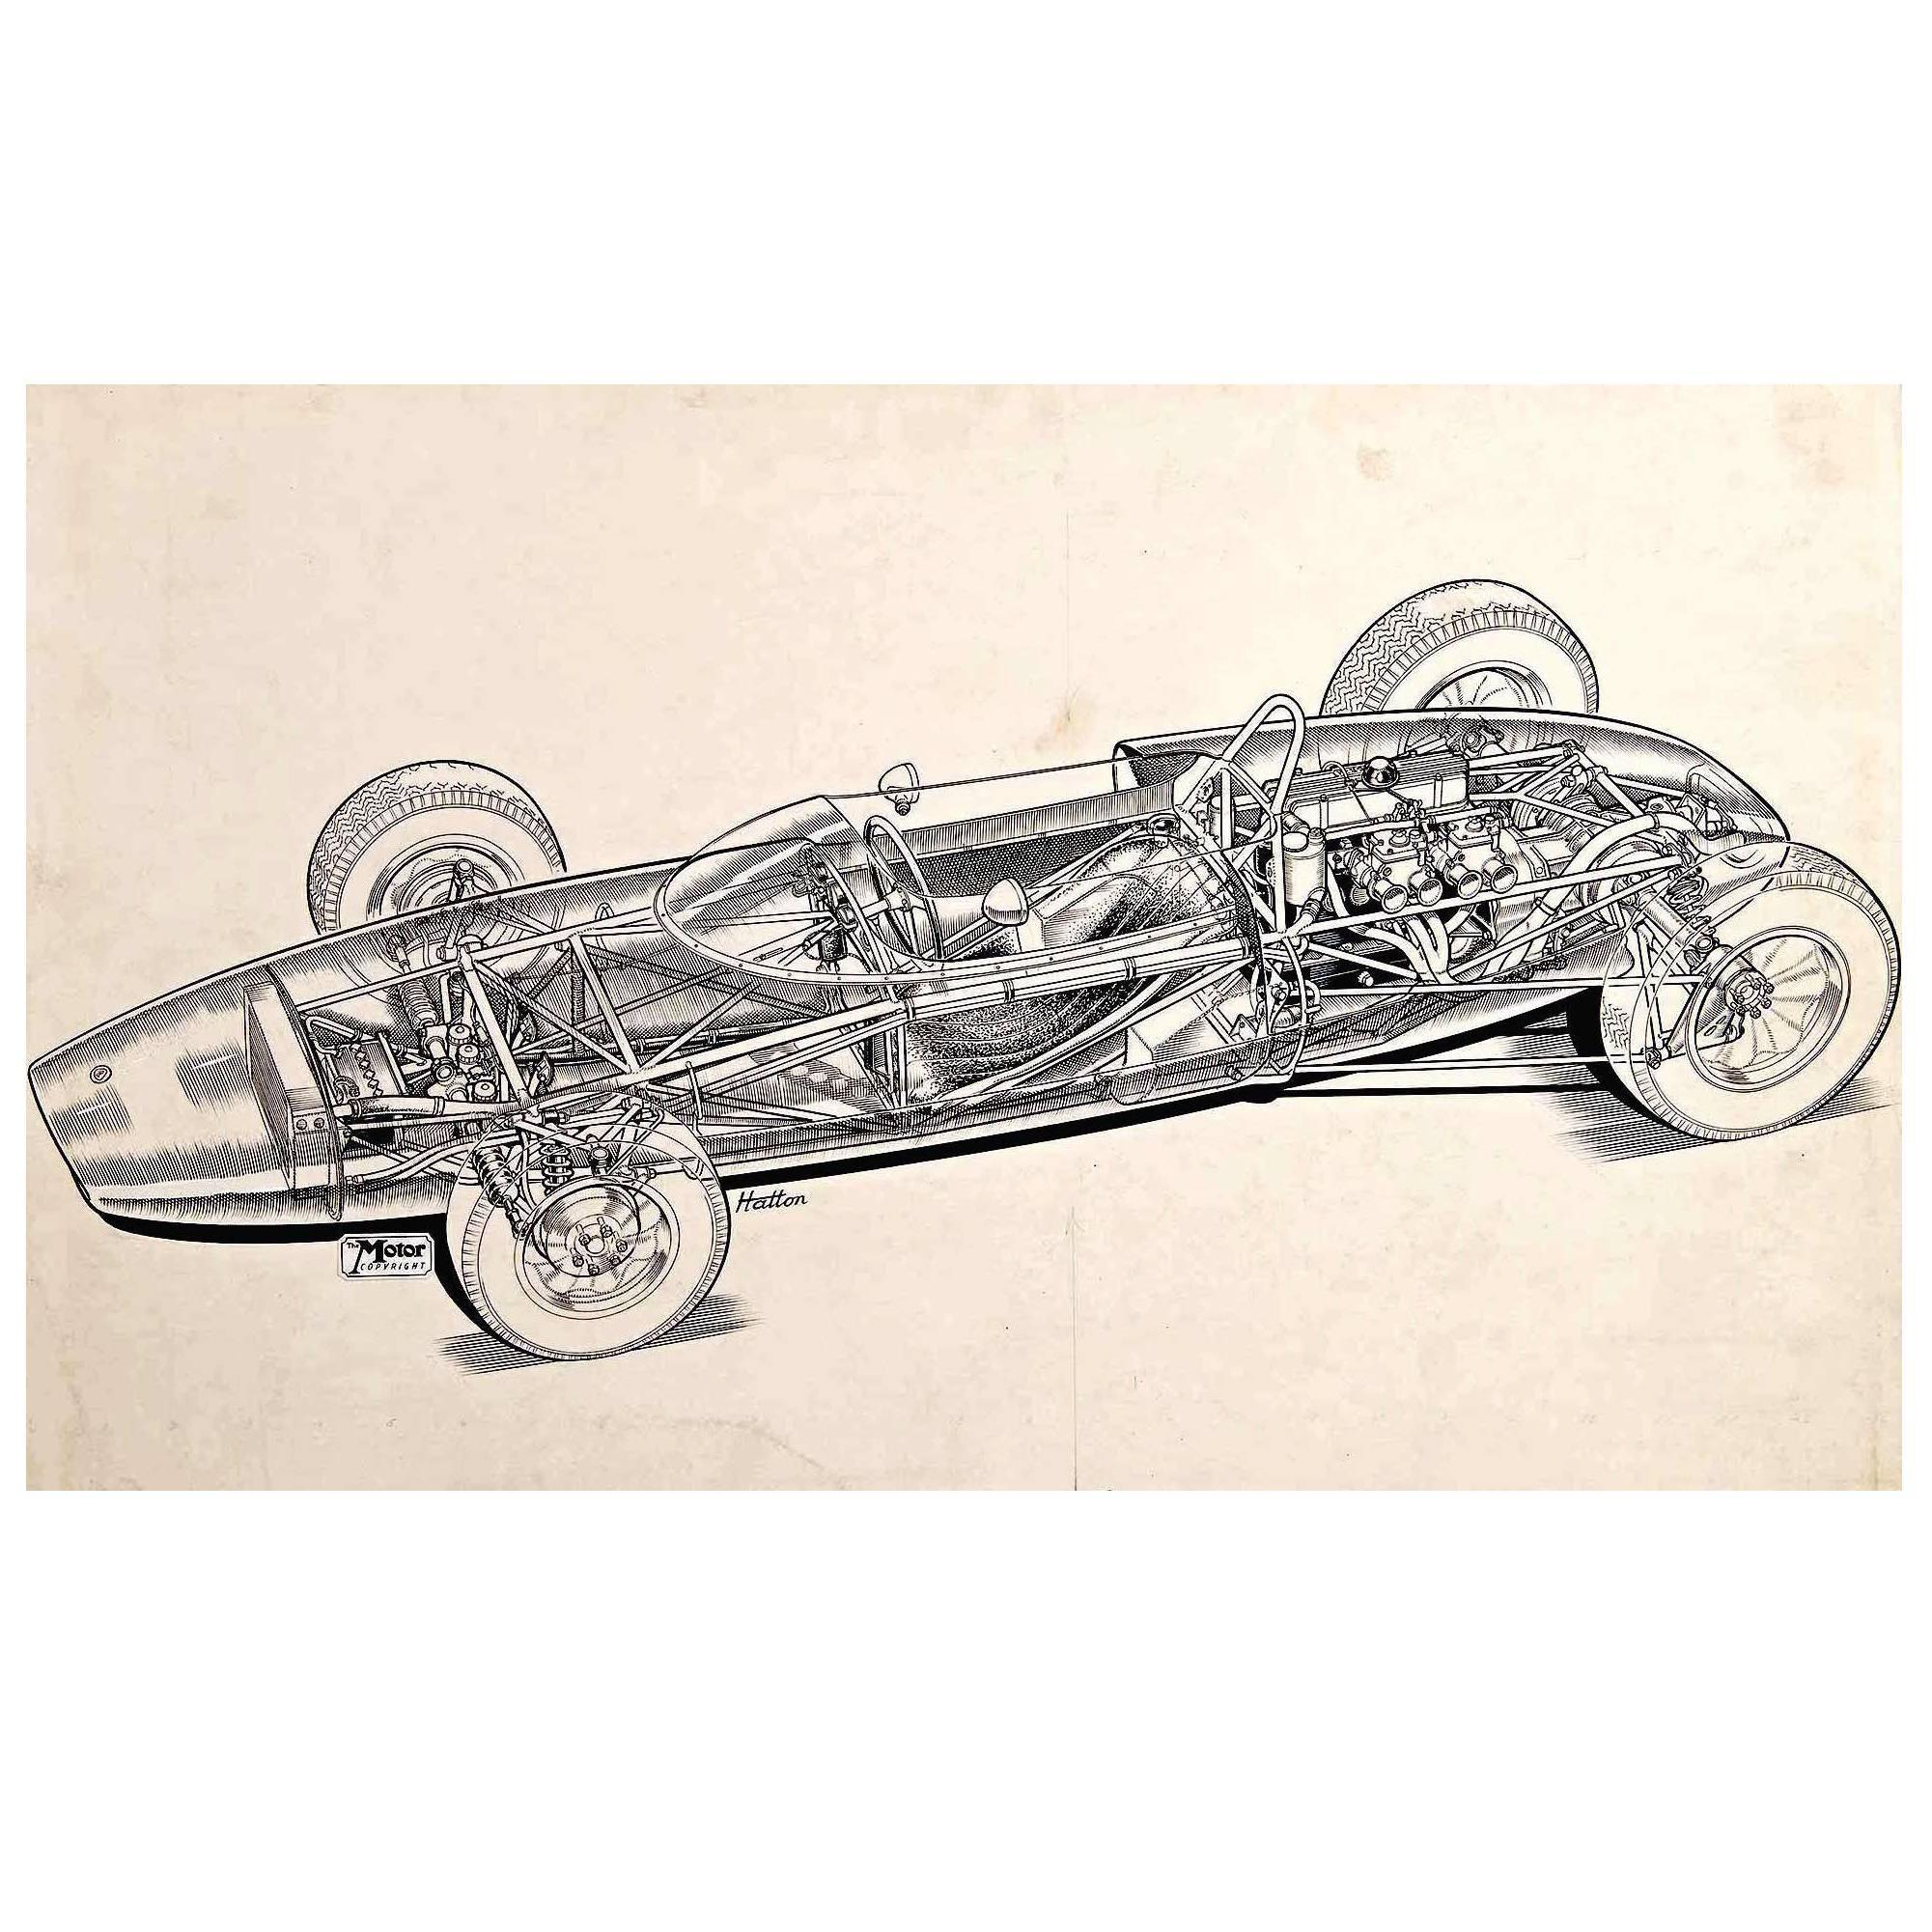 Original "Cutaway" Drawing of the Lotus 20 Racing Car by Brian Hatton